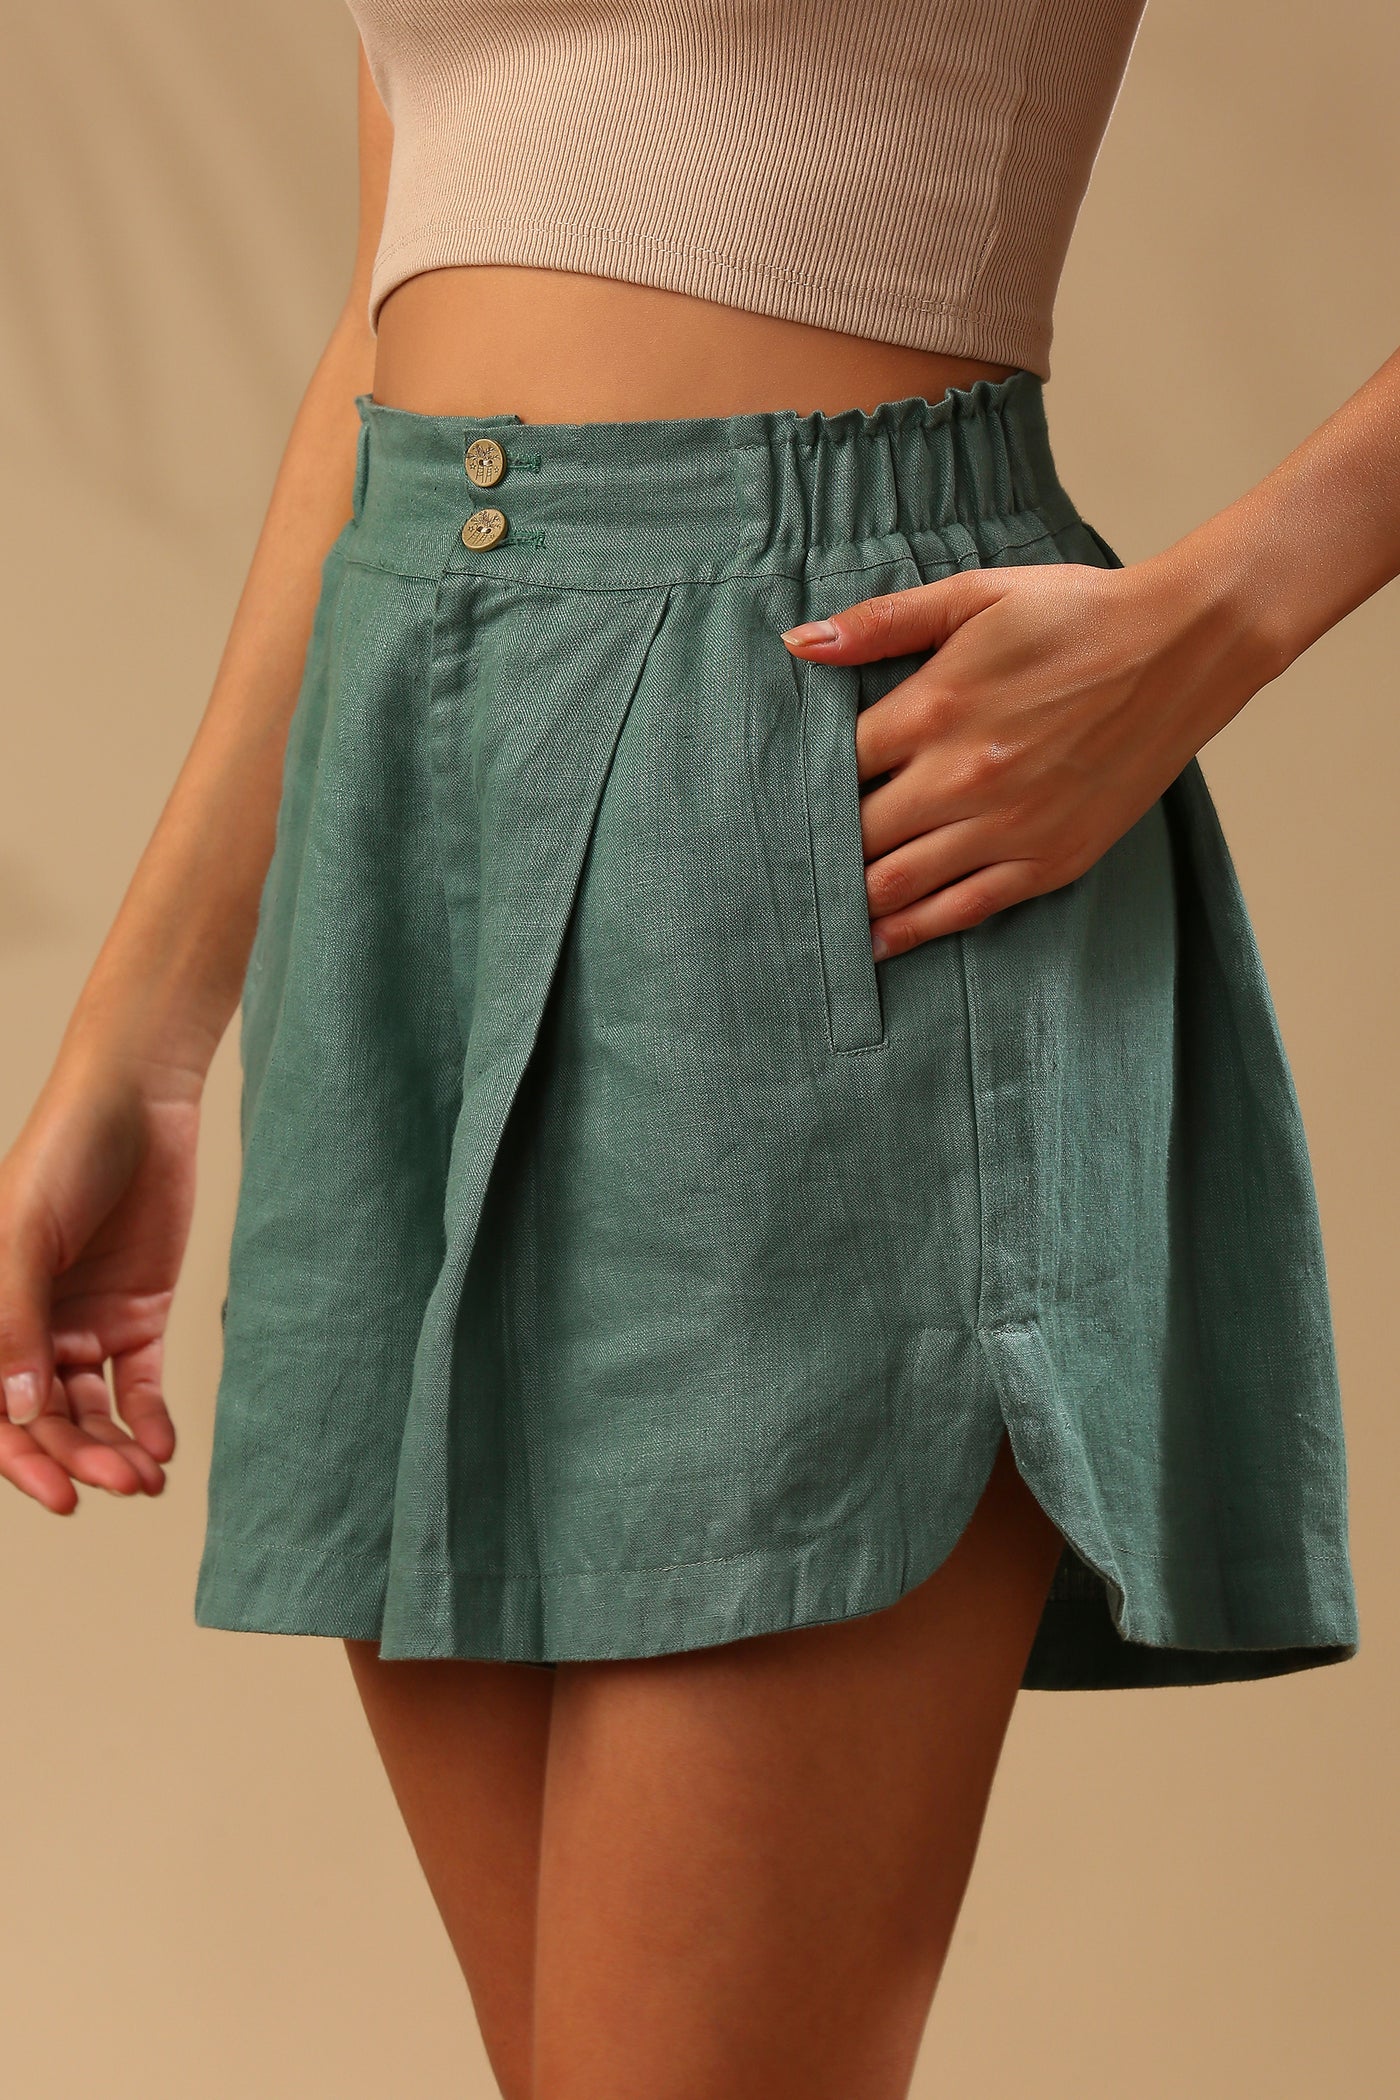 Sage Shorts